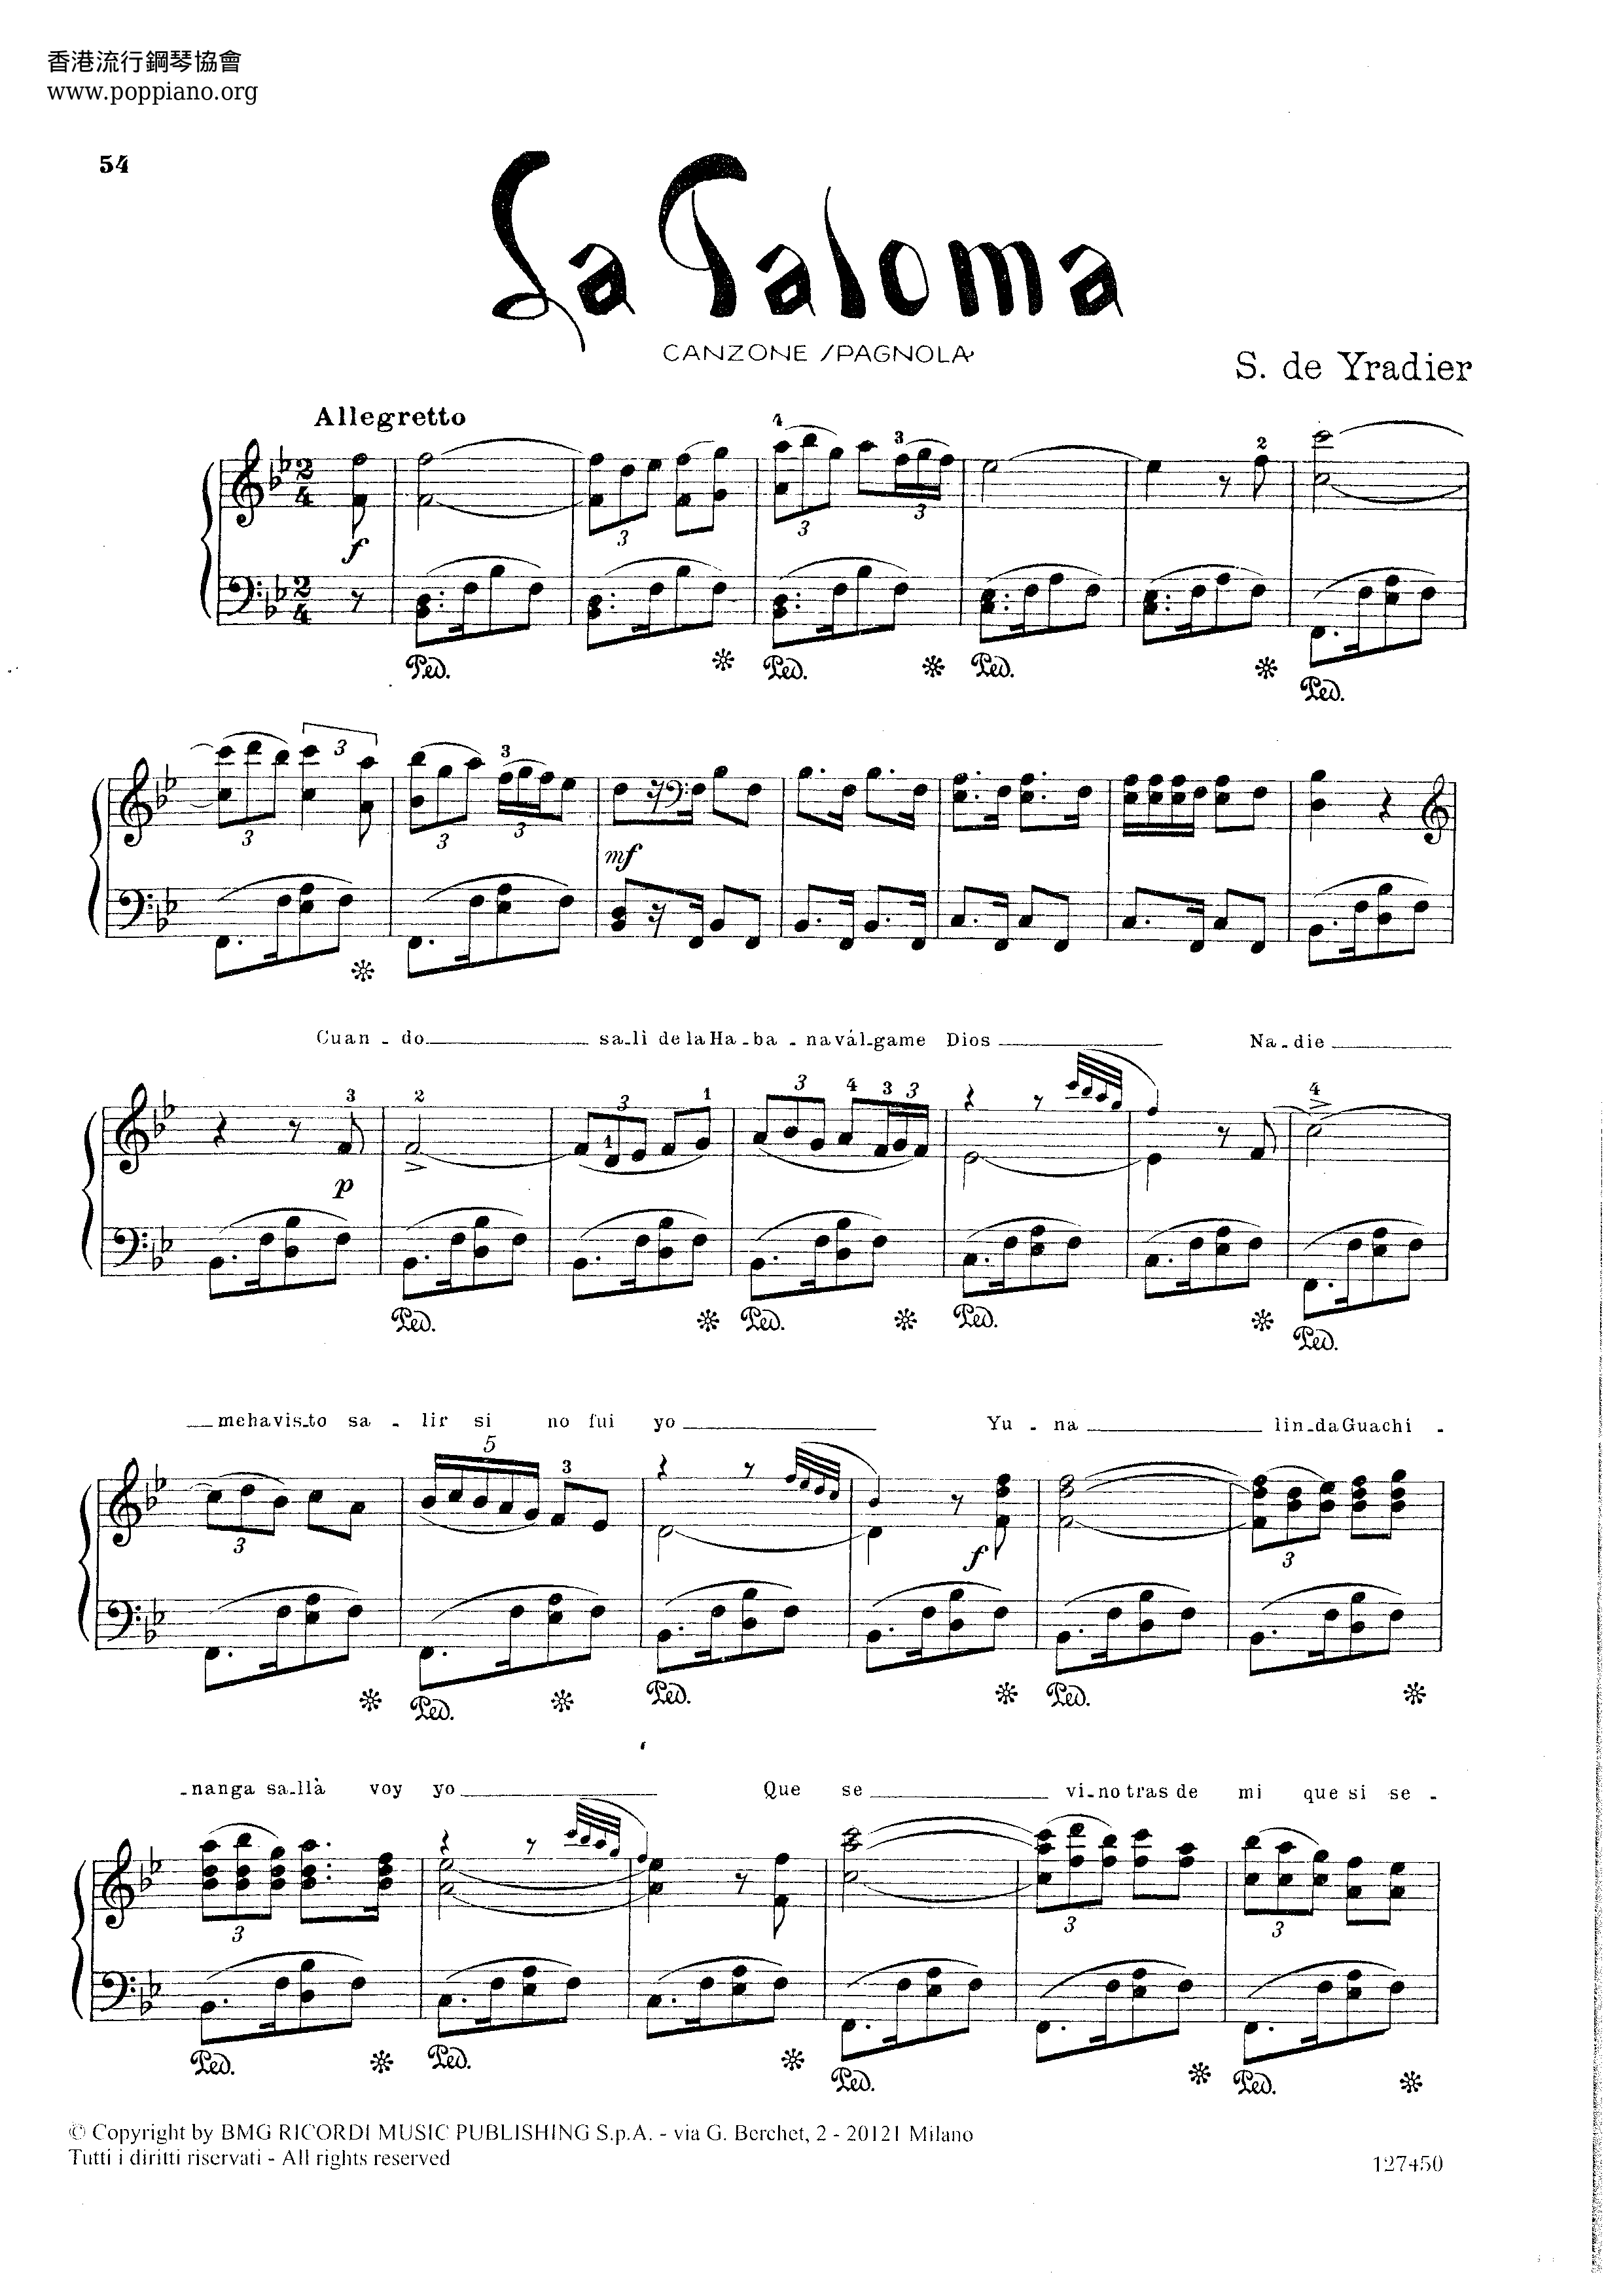 La Paloma Score